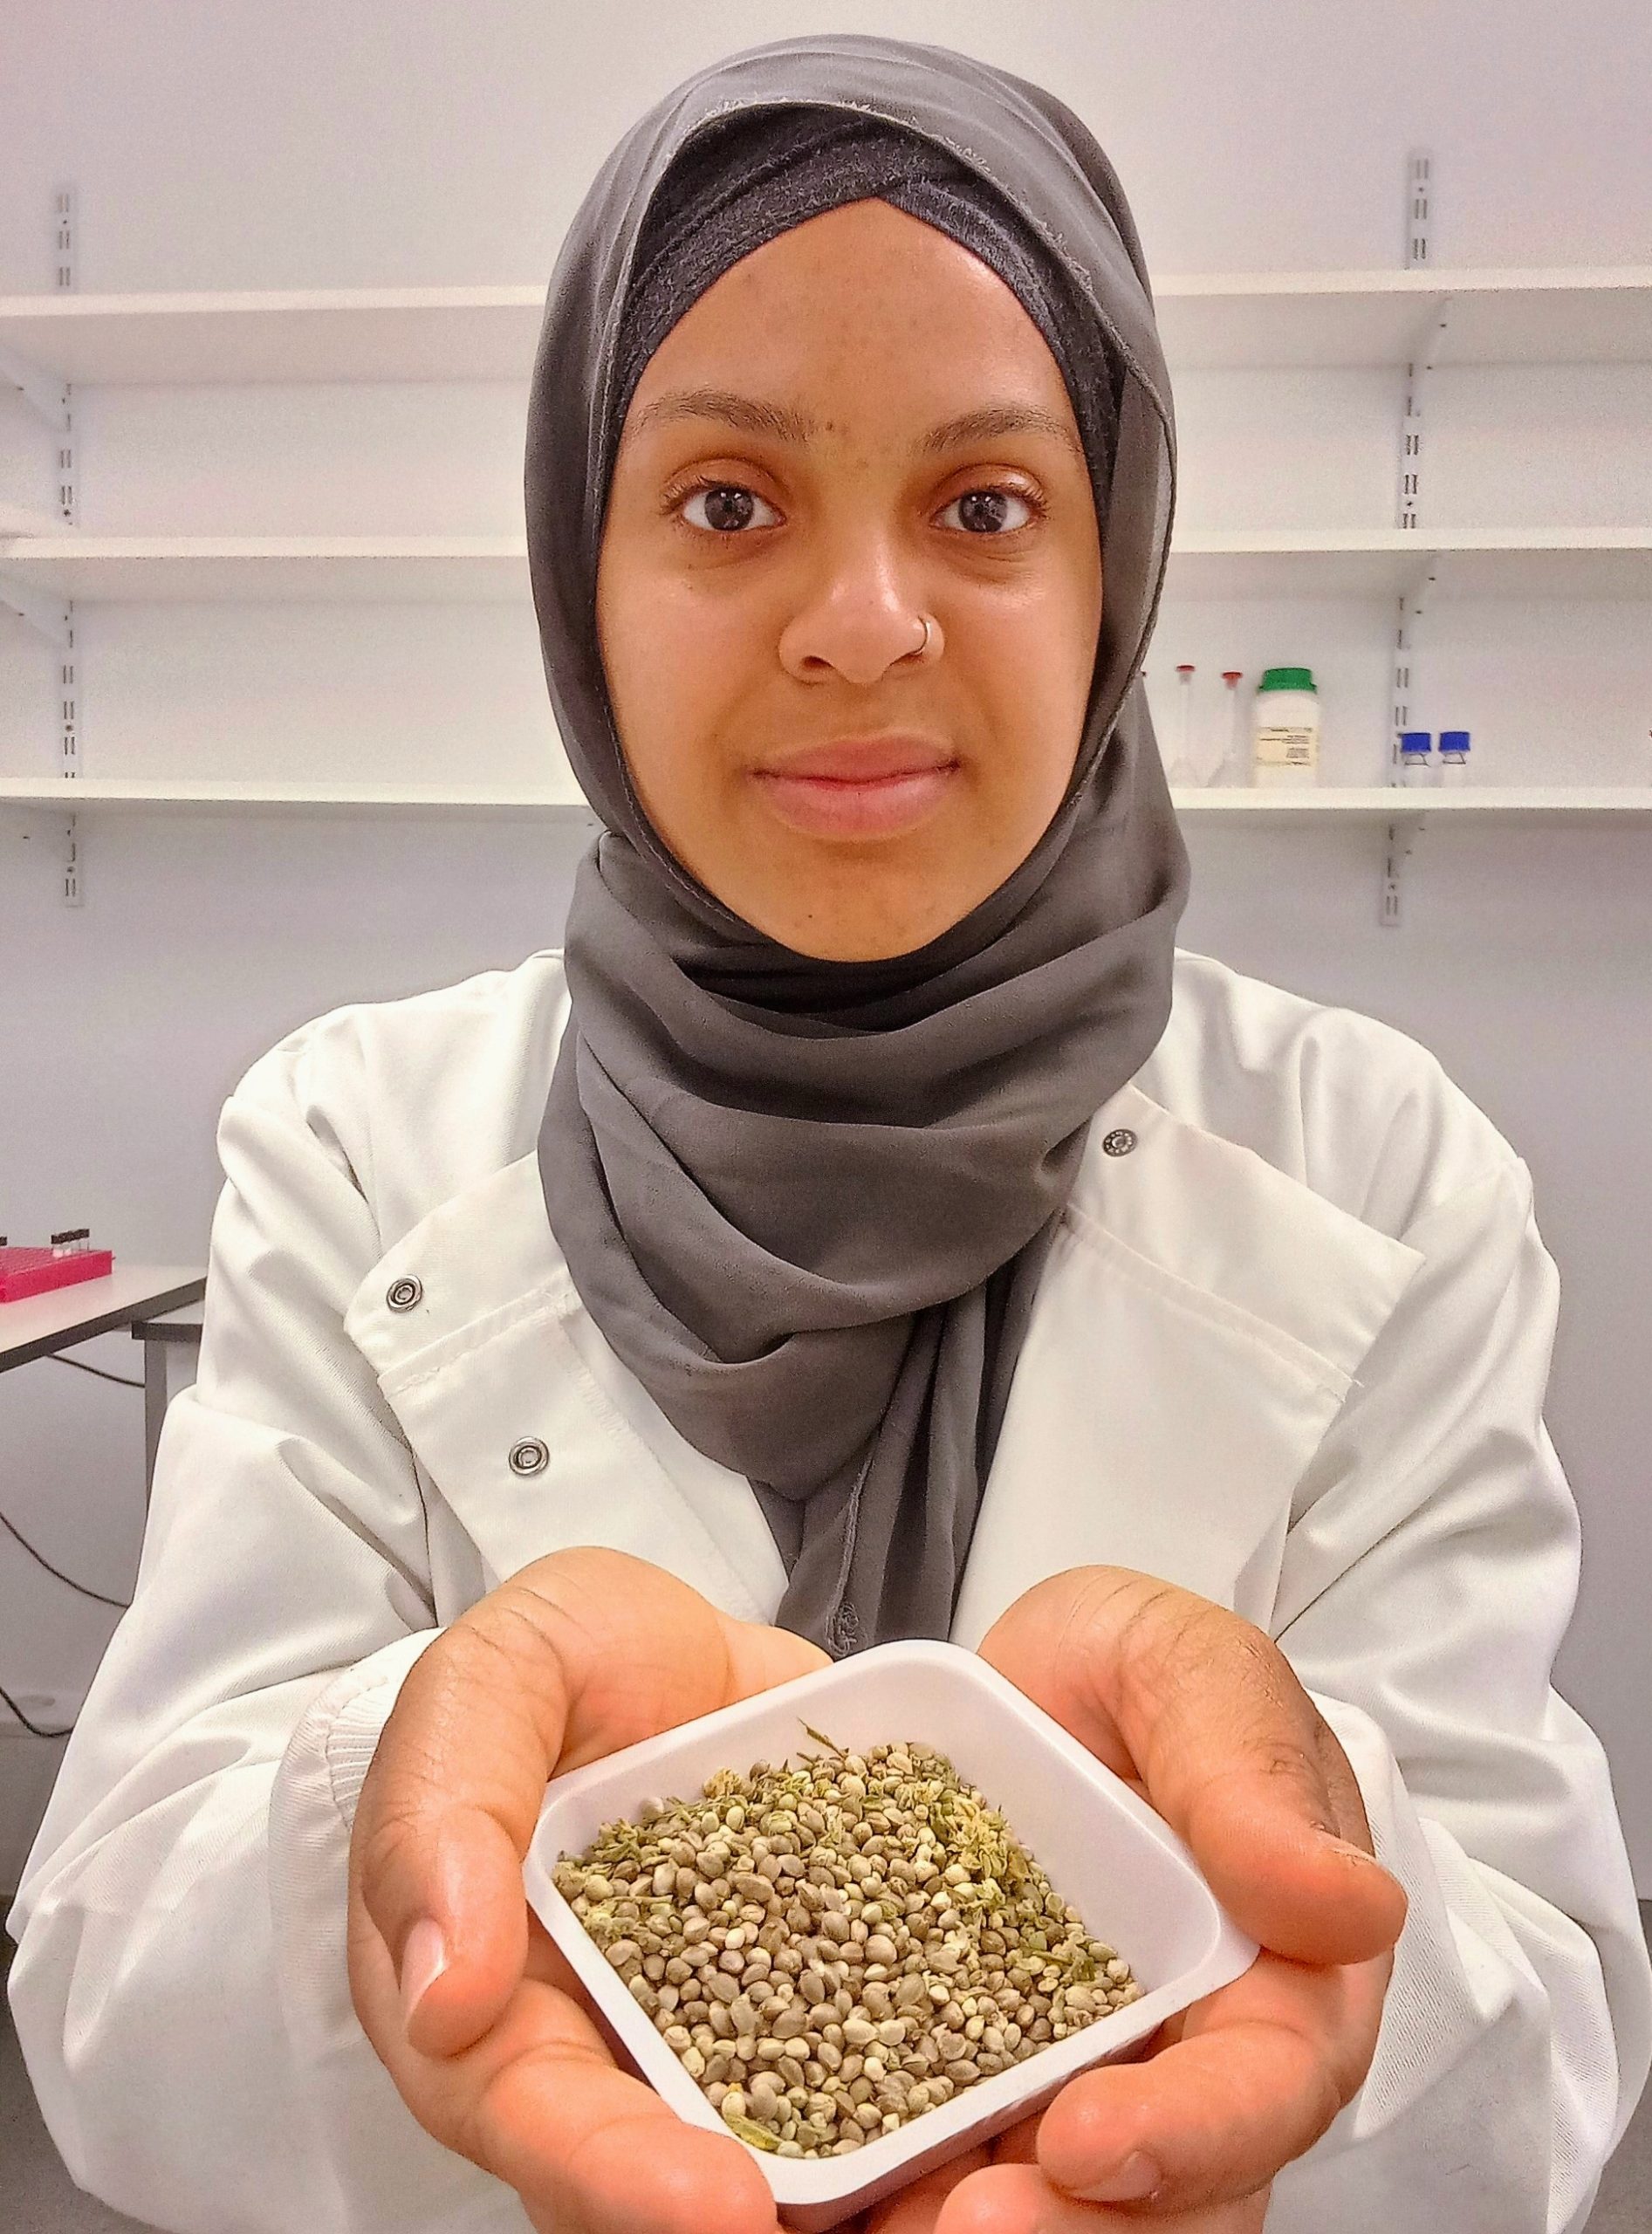 Jamila La-Malfa Donaldson holding a small container of hemp seeds